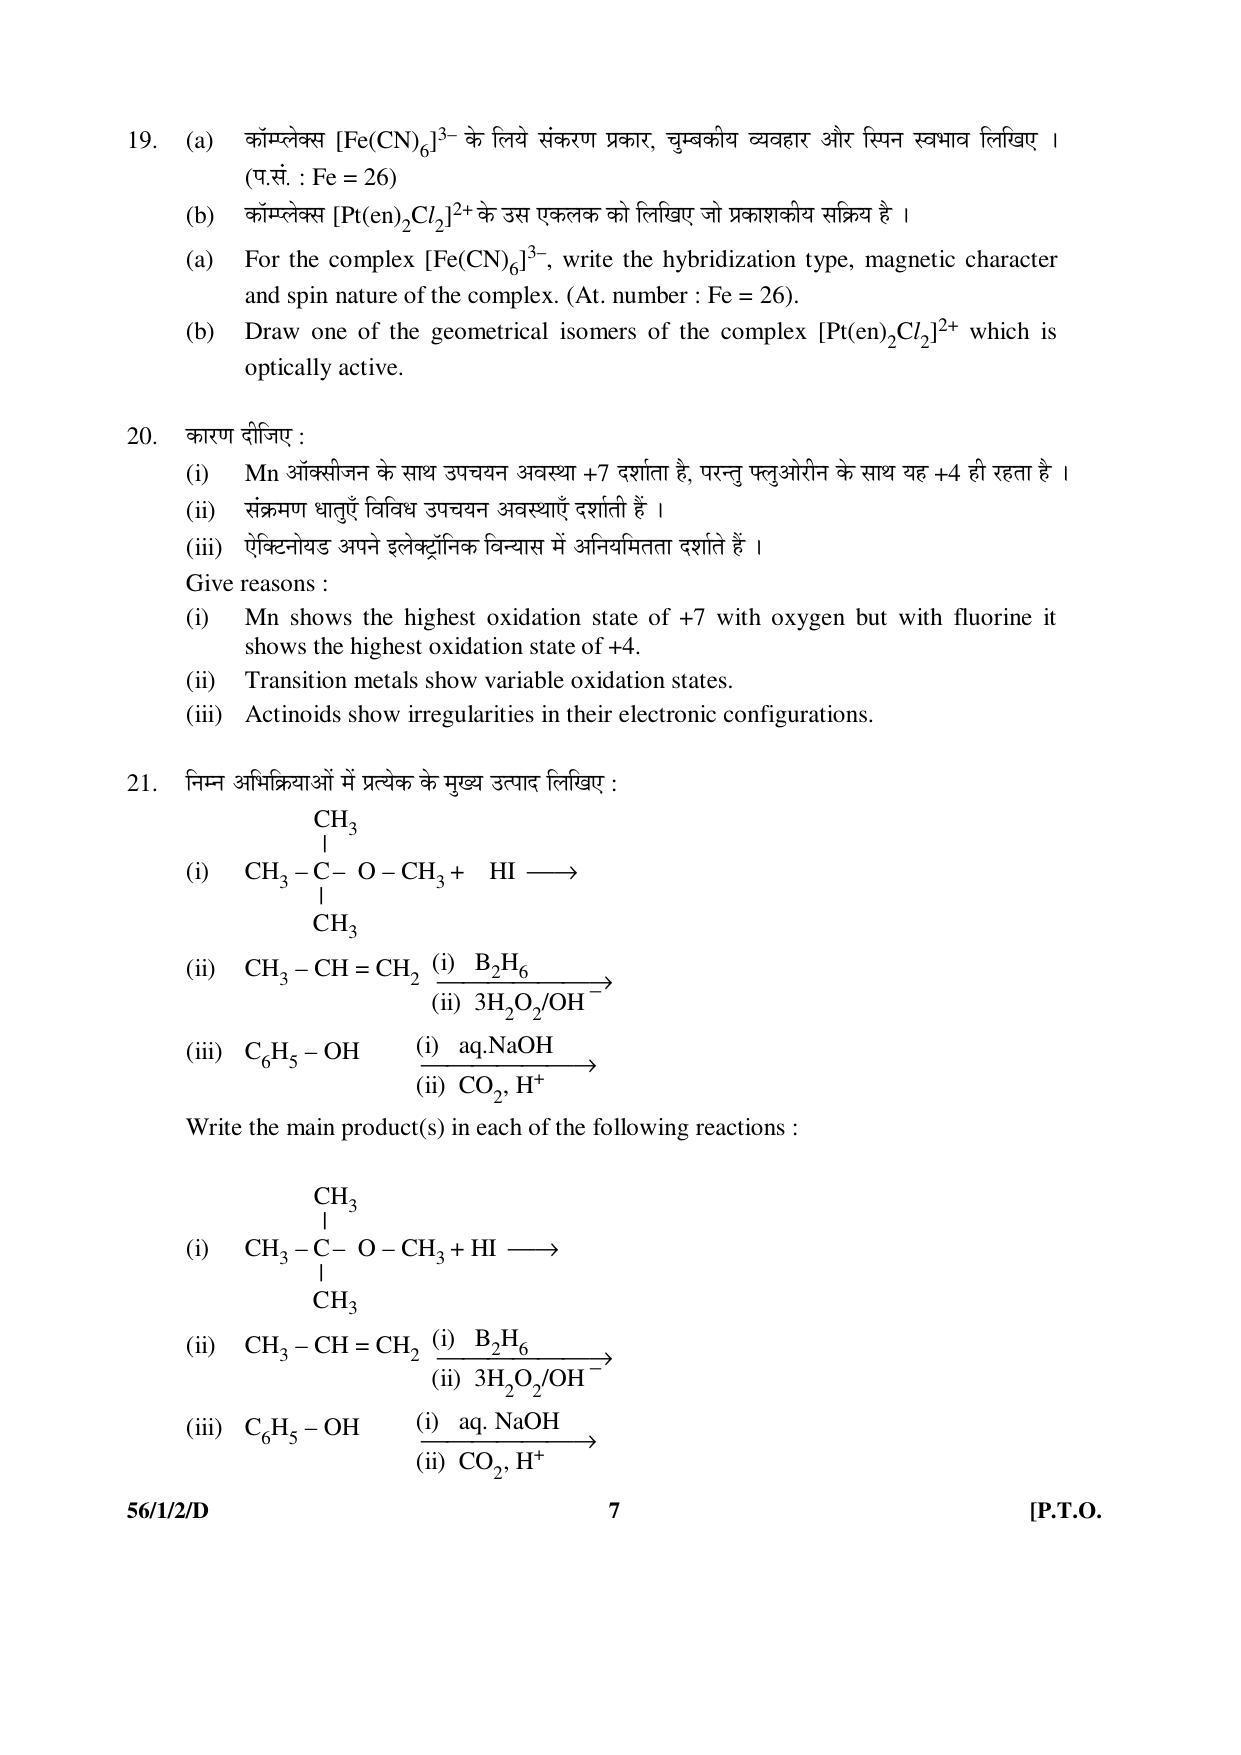 CBSE Class 12 56-1-2-D CHEMISTRY 2016 Question Paper - Page 7